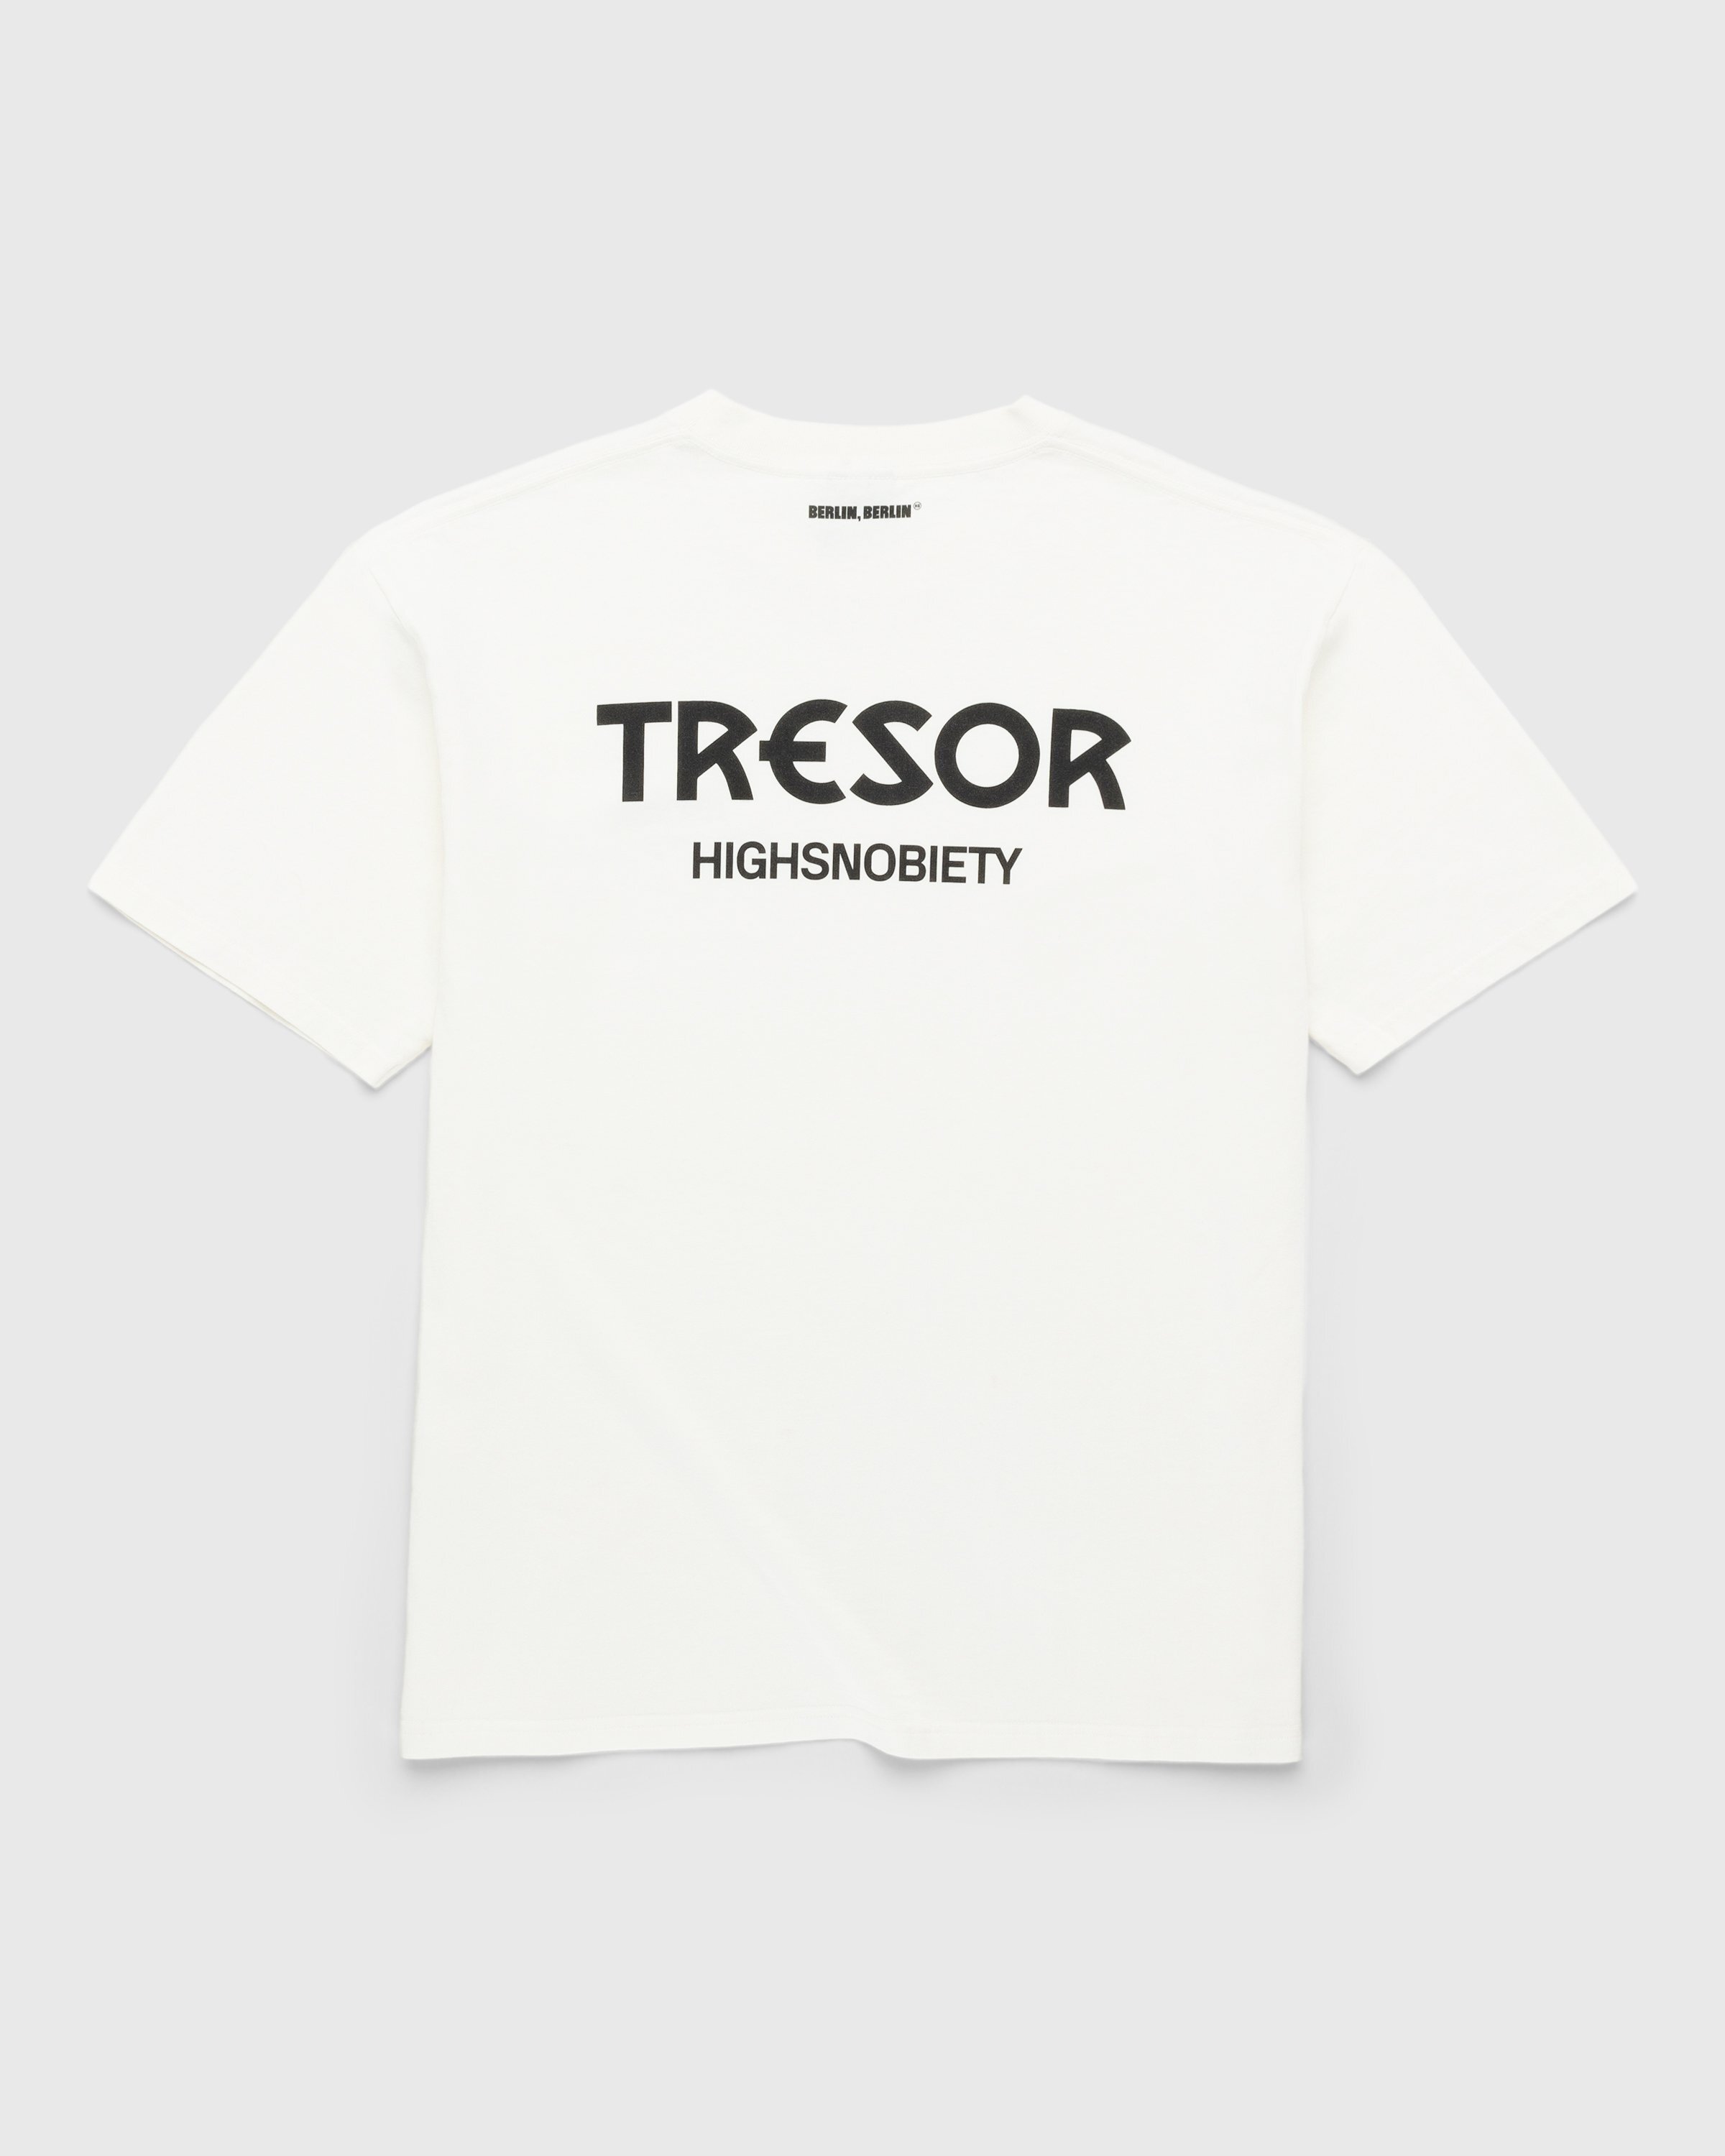 Tresor x Highsnobiety - BERLIN, BERLIN 3 T-Shirt White - Clothing - White - Image 1